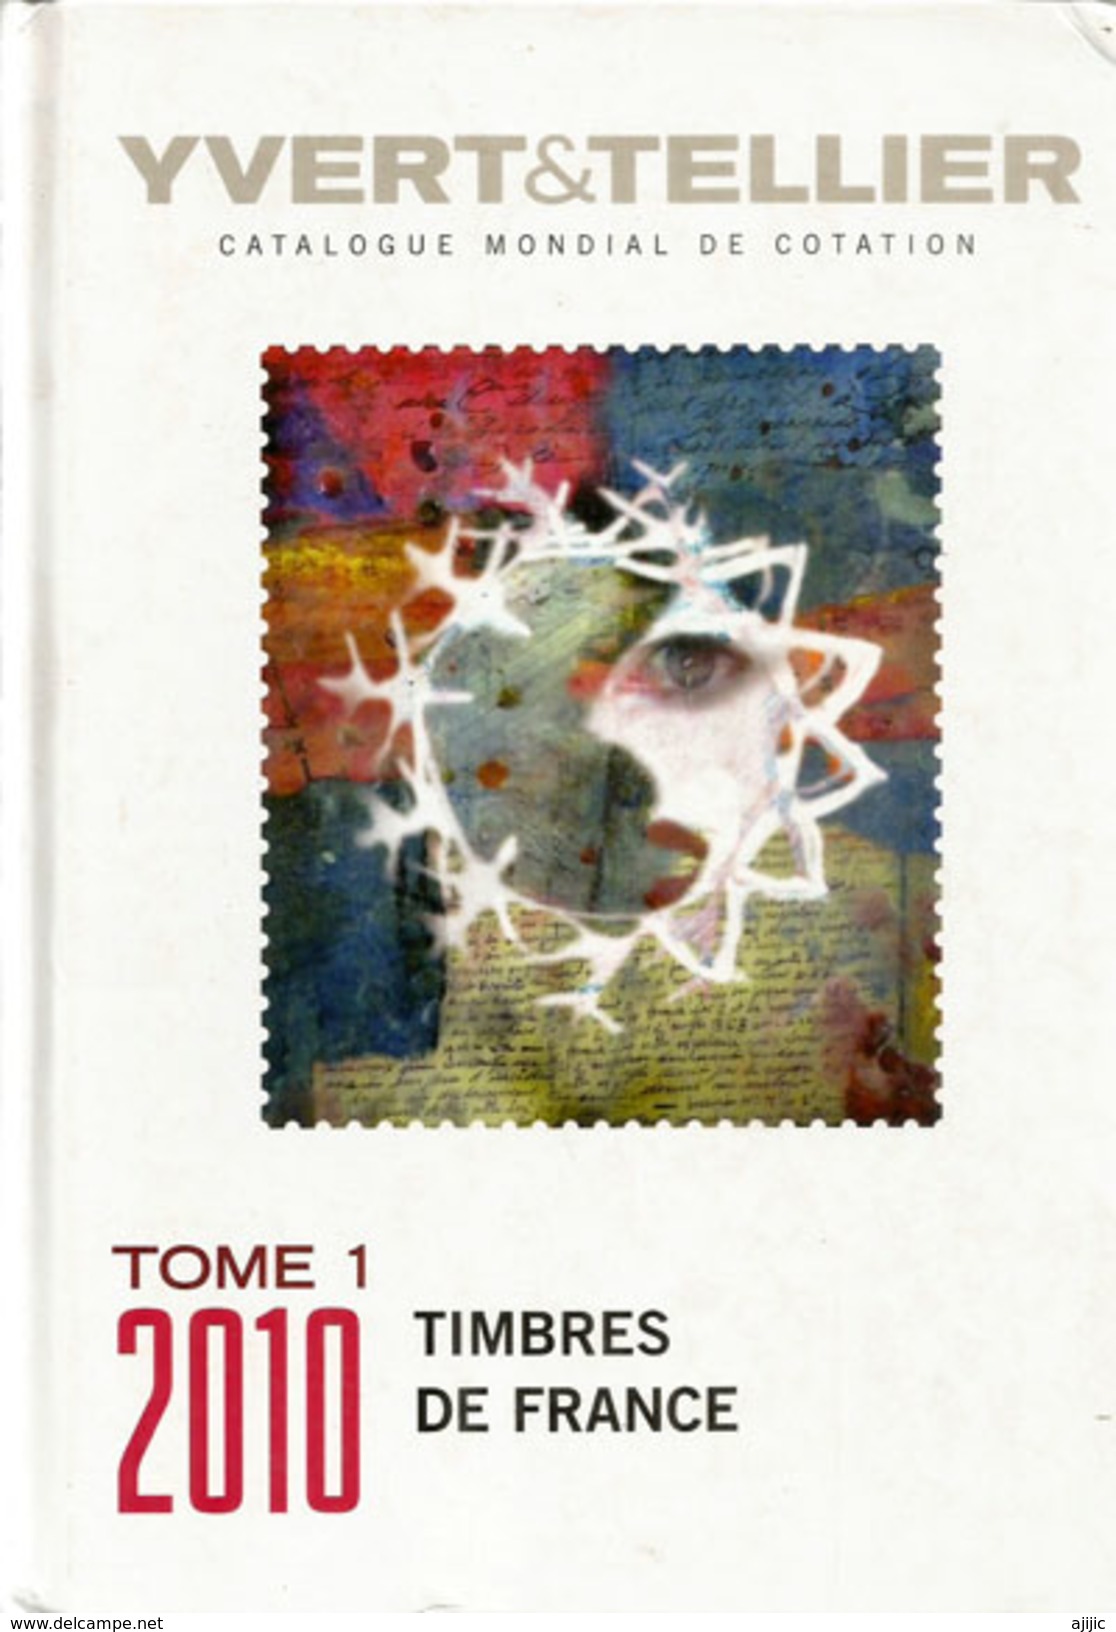 YVERT & TELLIER TOME 1 . 2010 Timbres De France. 880 Pages Couleurs, état Neuf - France